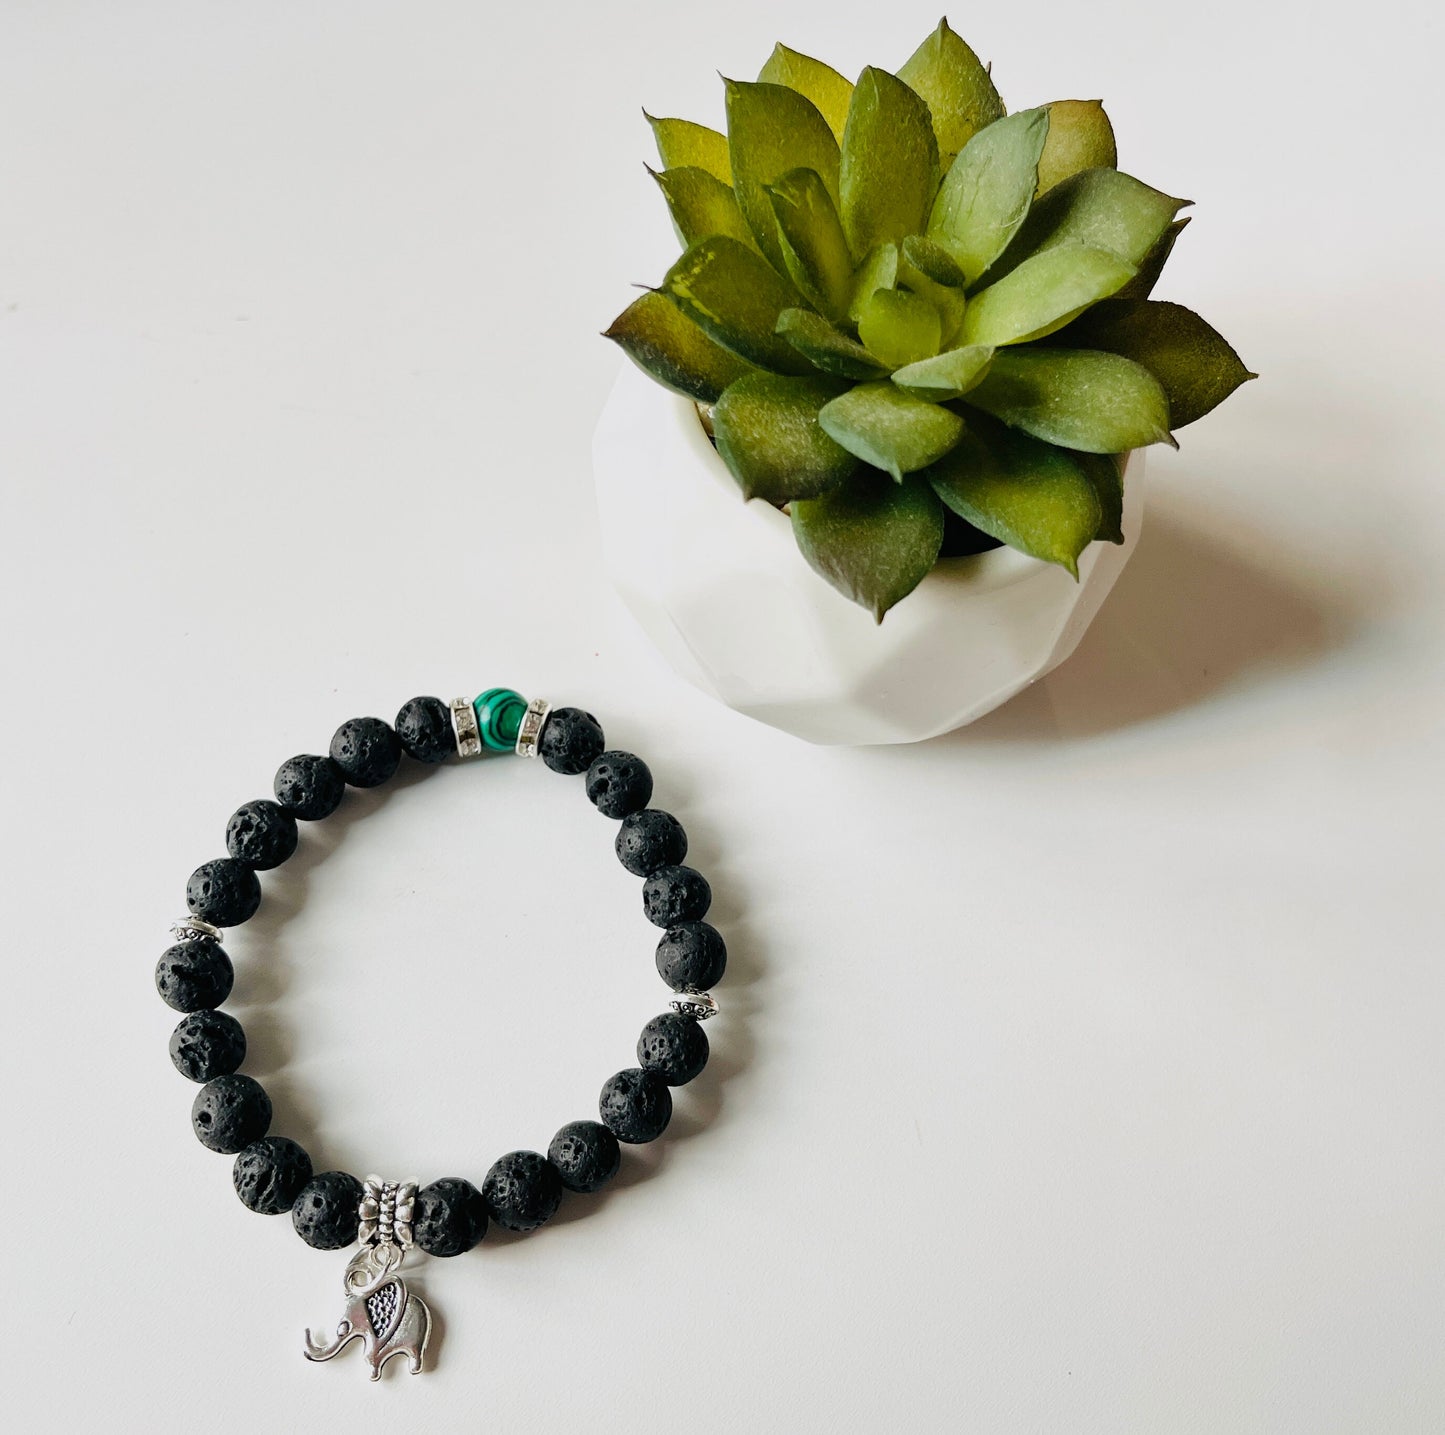 Handmade bracelets unique jewelry customize with initials lava beads unisex carnelian